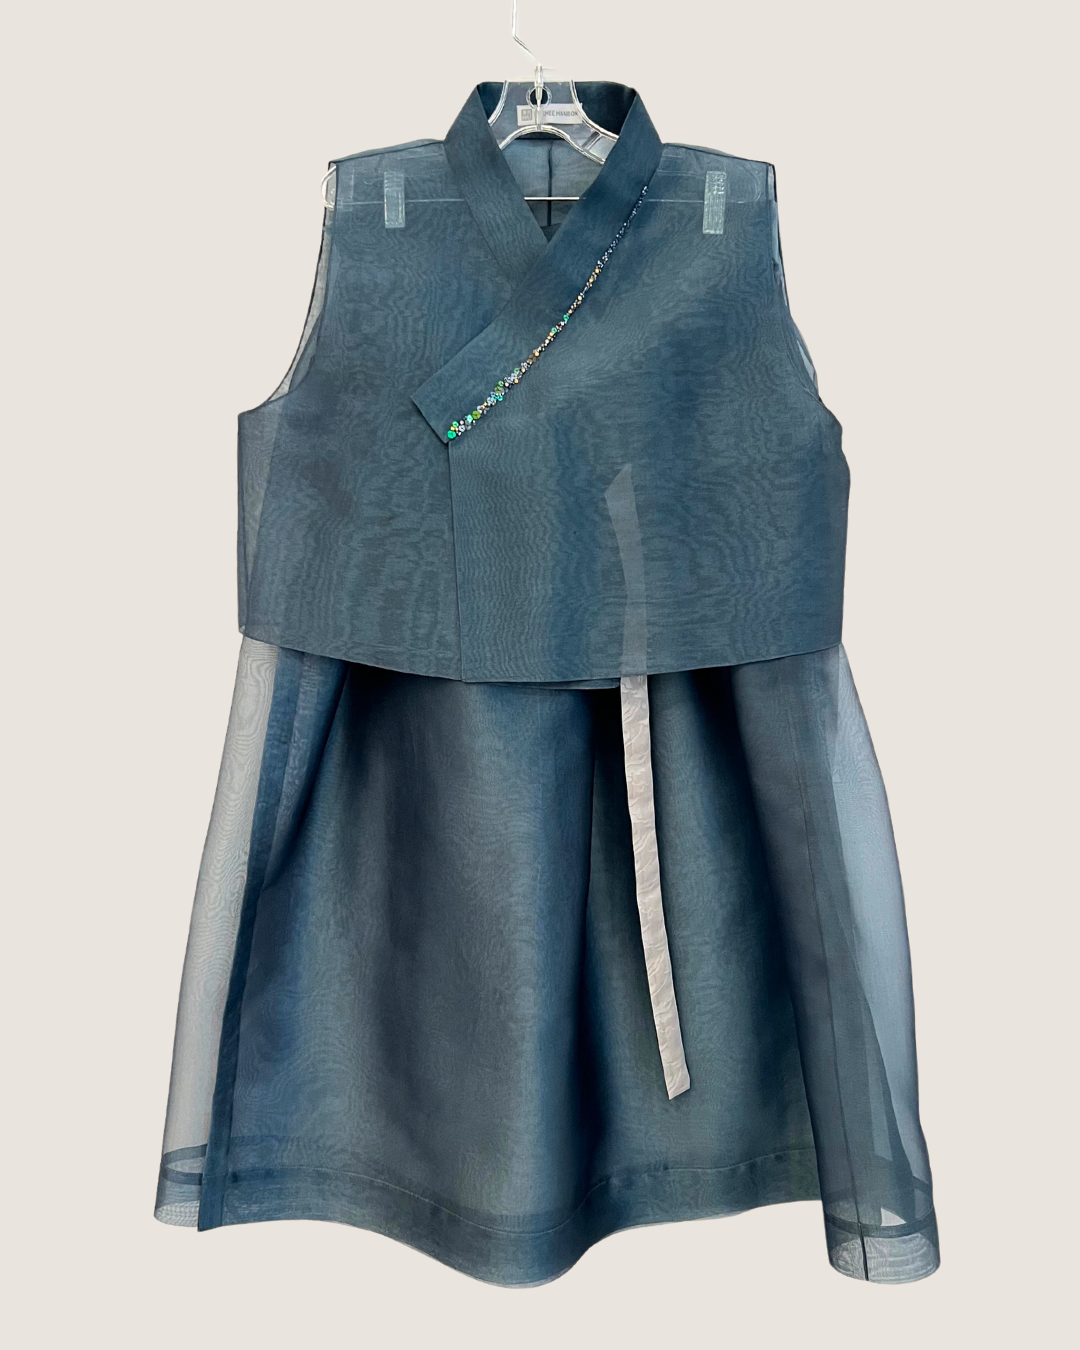 Hand-beaded jeogori with single layer skirt